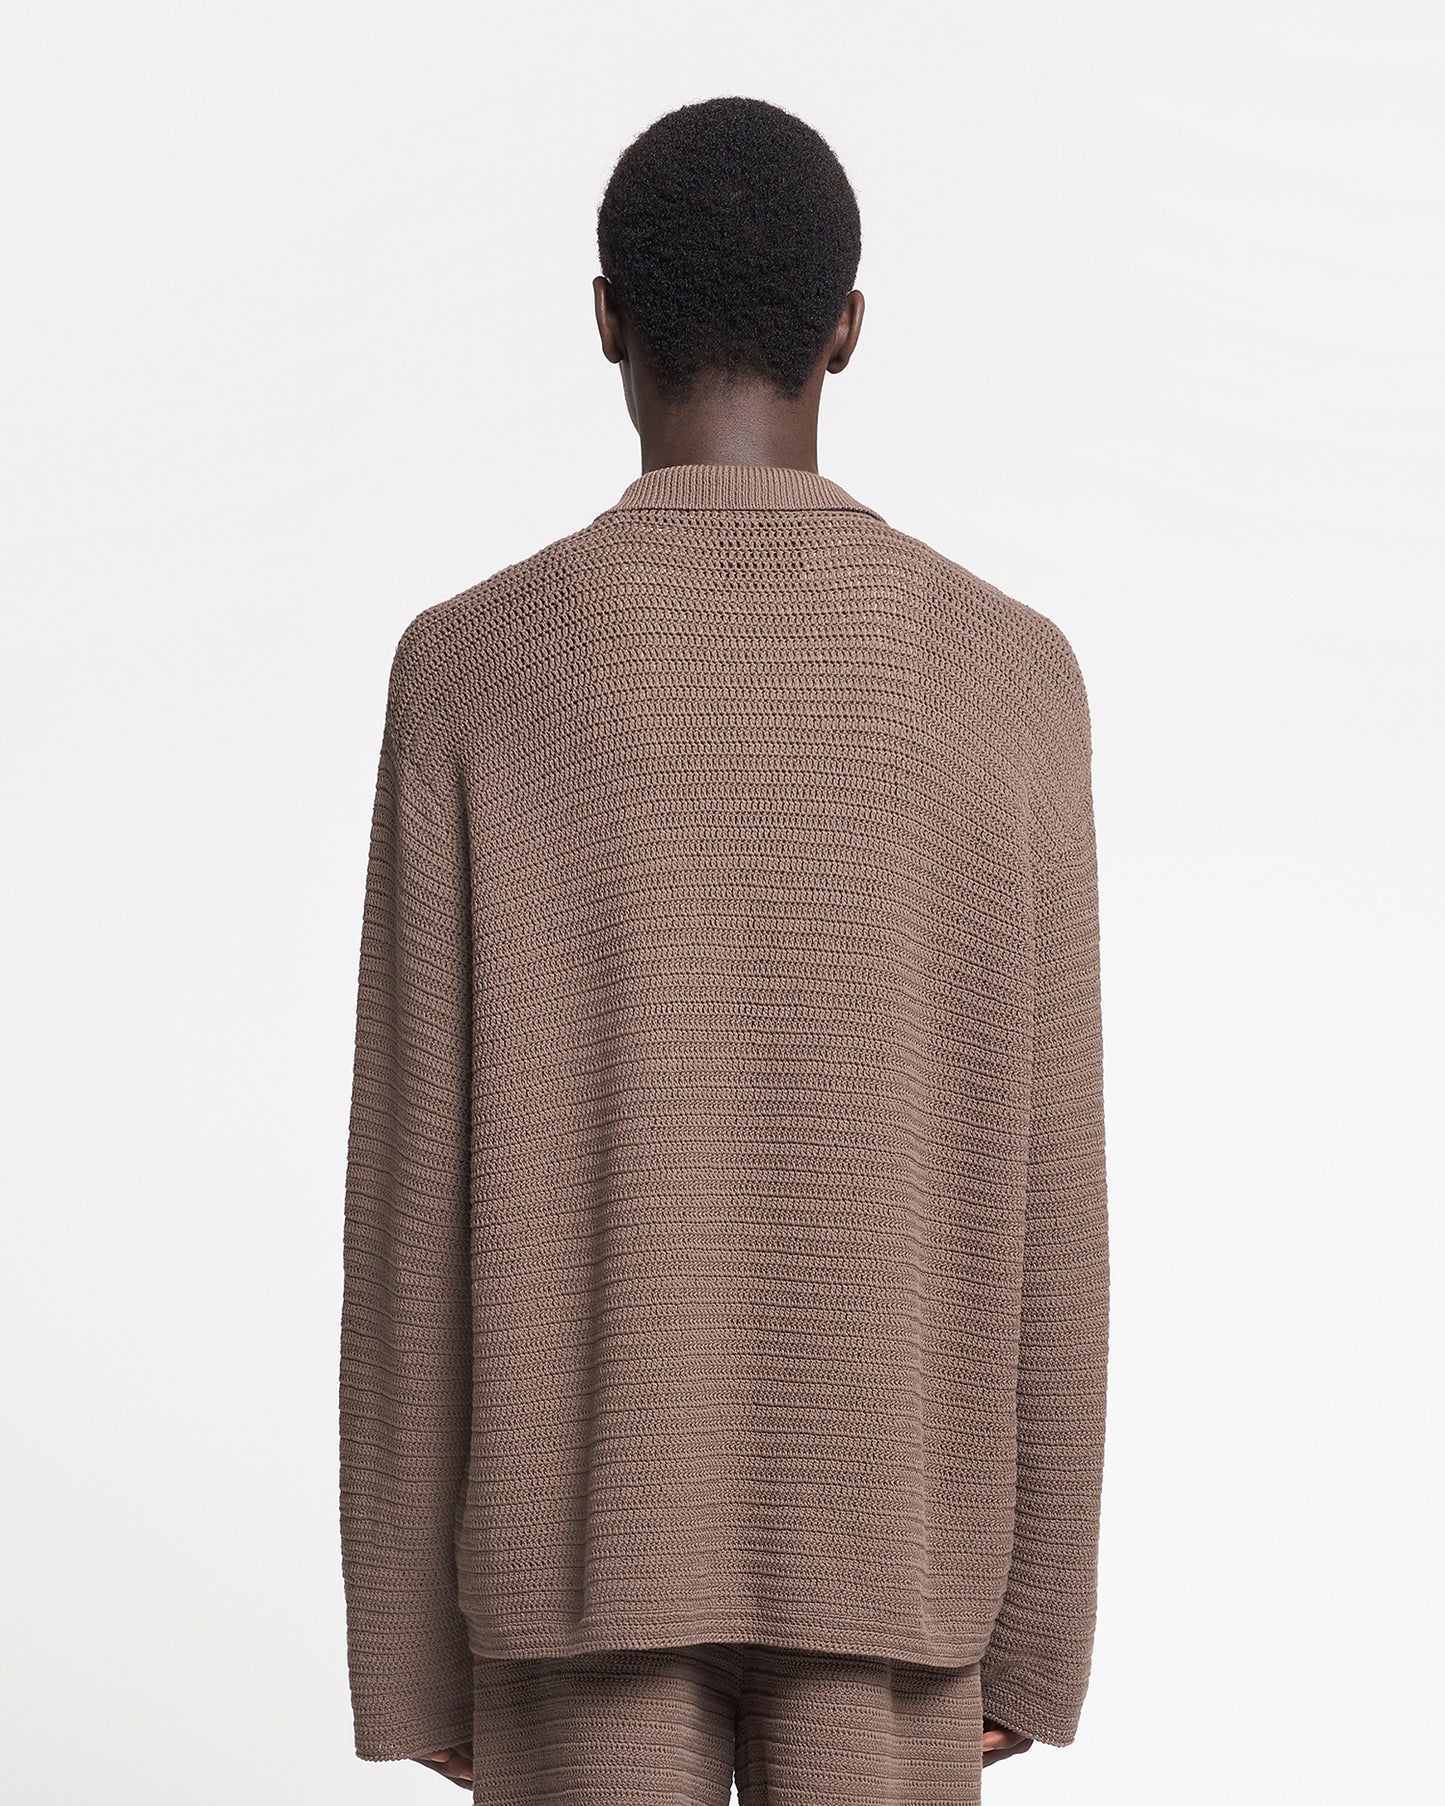 Nicolas - Linear Crochet Shirt - Fossil Brown